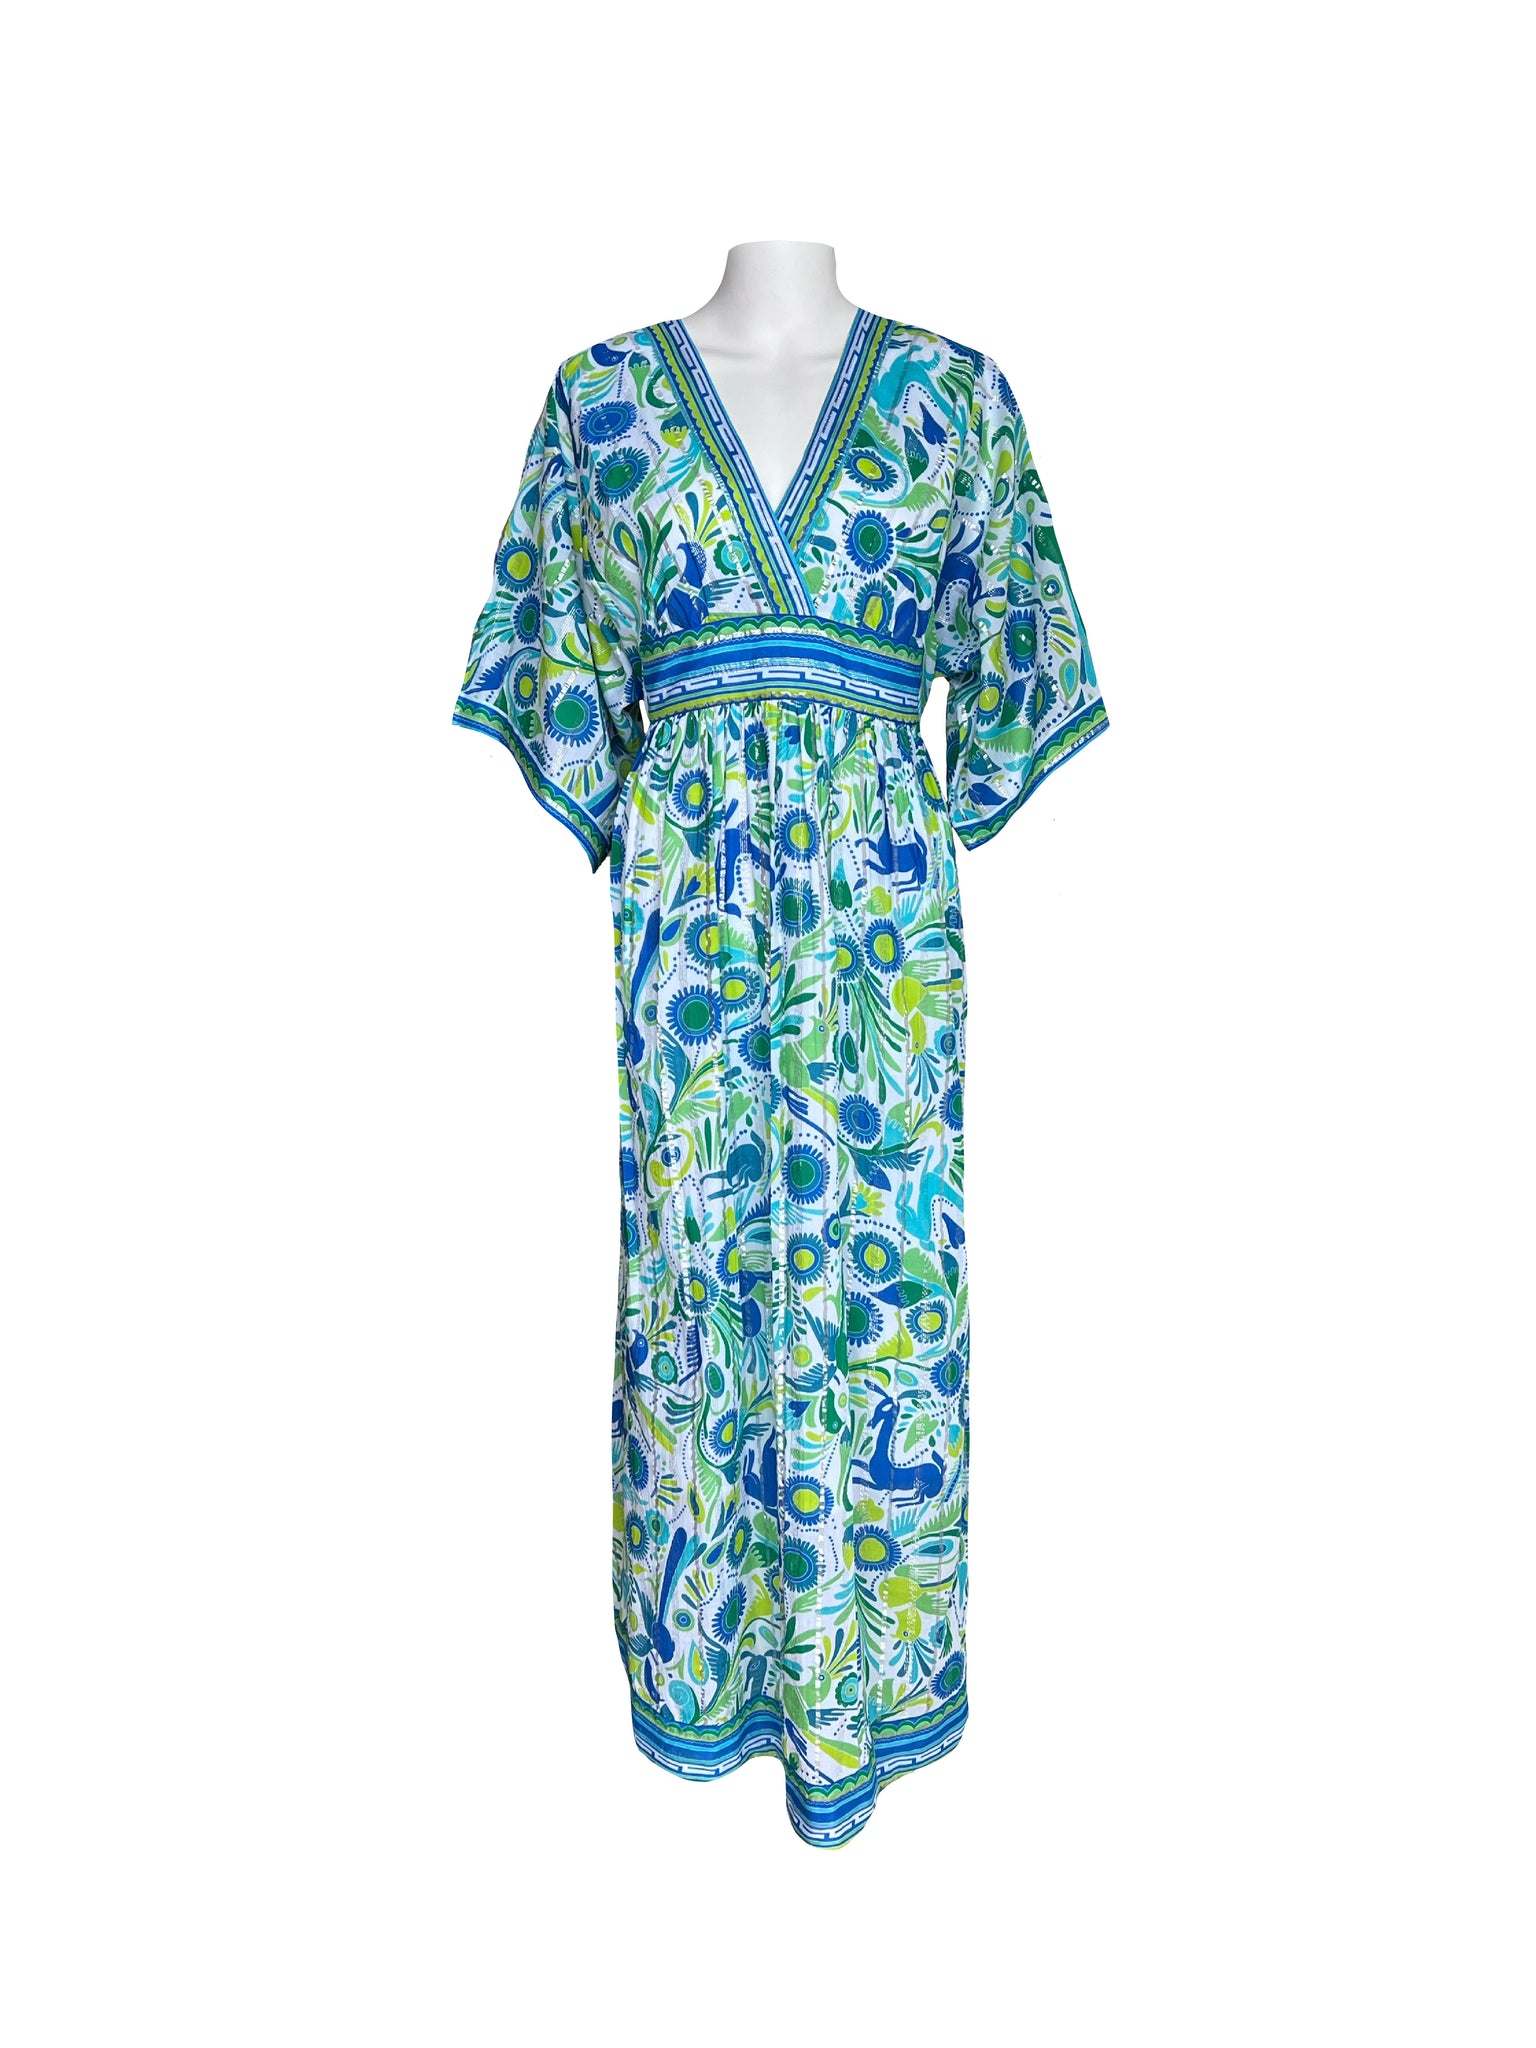 Vintage Kaftan Maxi Dress - Oberon Print - White, Blues & Greens